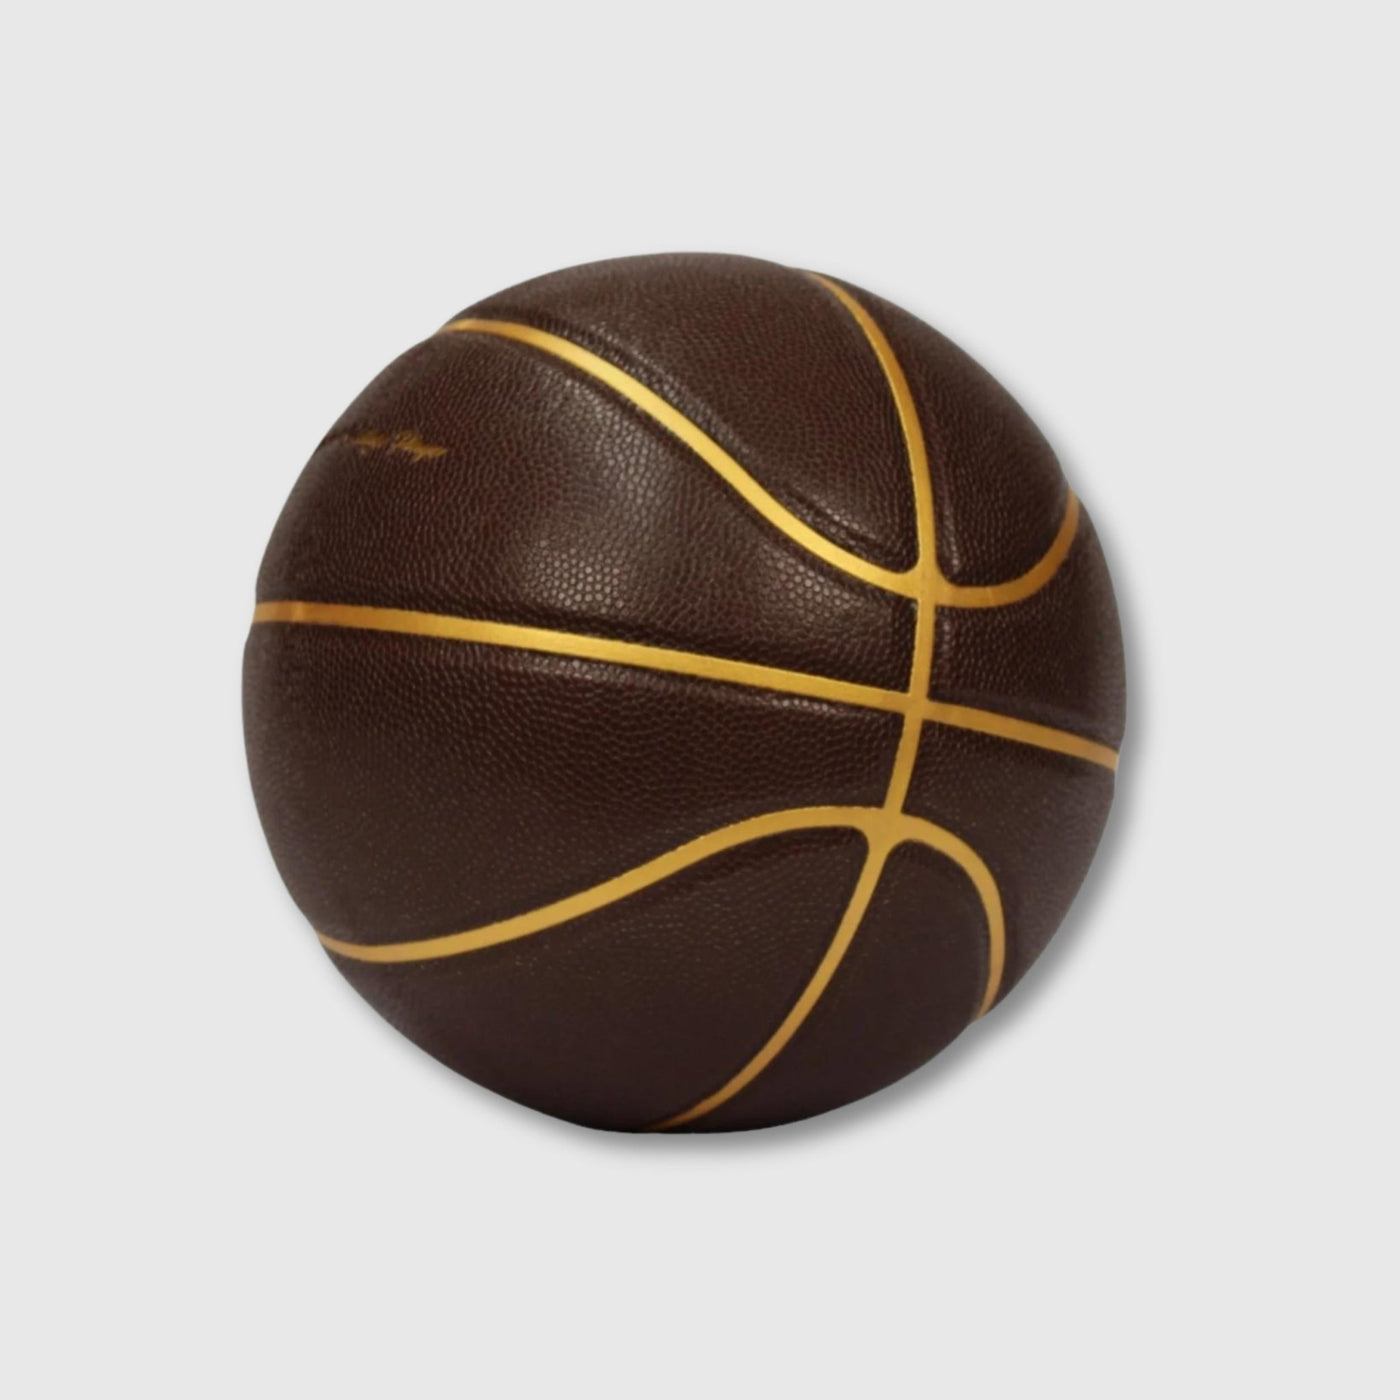 Dark Brown / Gold Leather Basketball - Limited Edition - MODEST VINTAGE PLAYER LTD